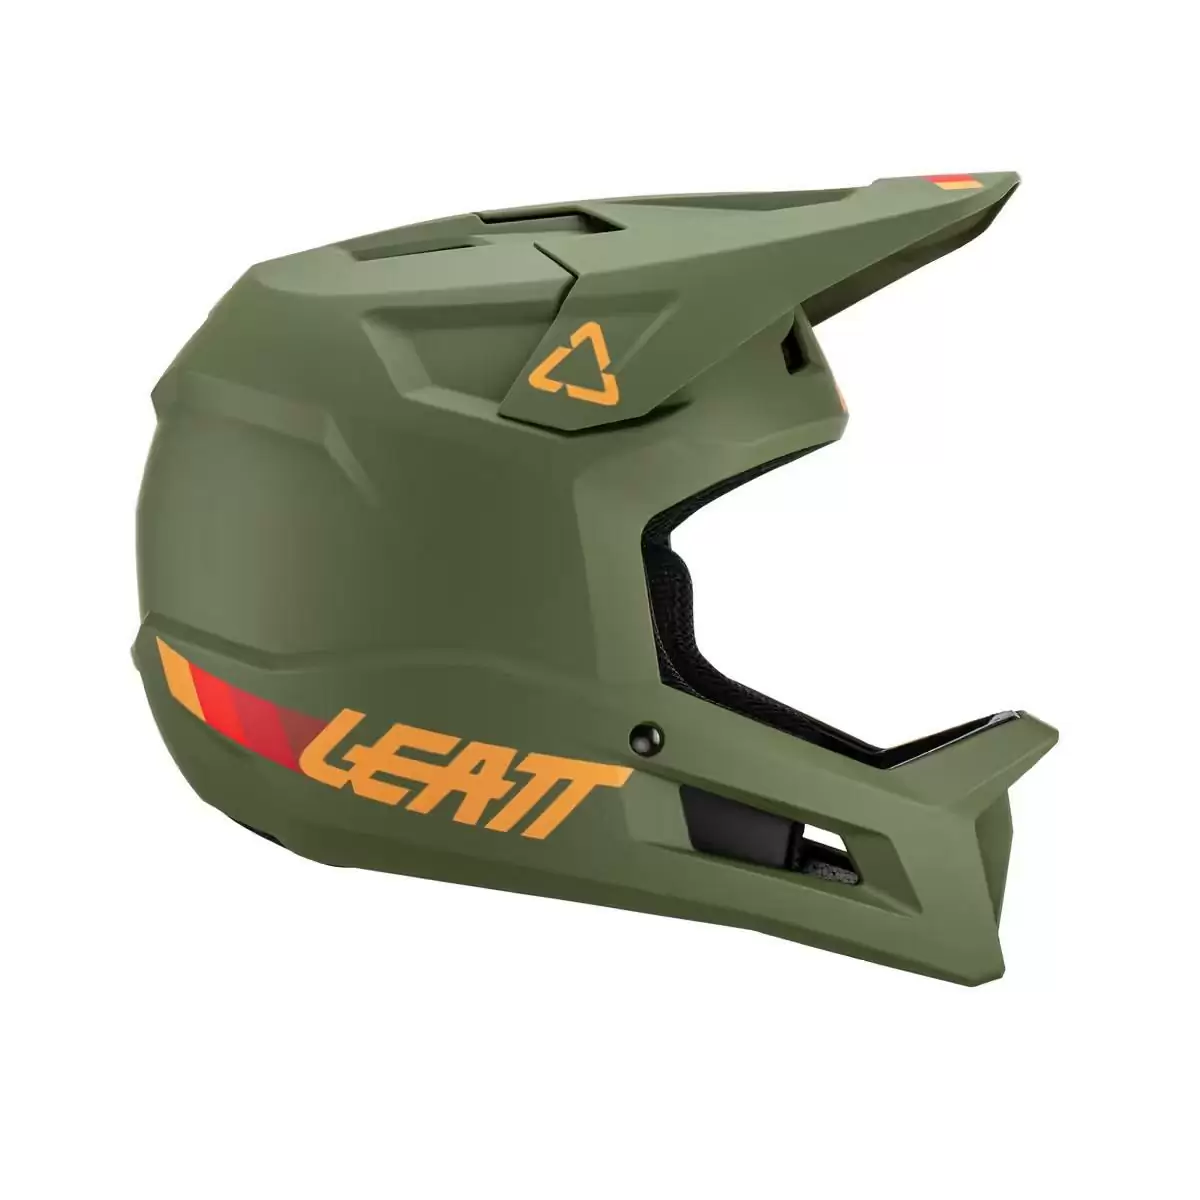 Gravity 1.0 MTB Fullface Helmet Green Pine Size XS (53-54cm) #2